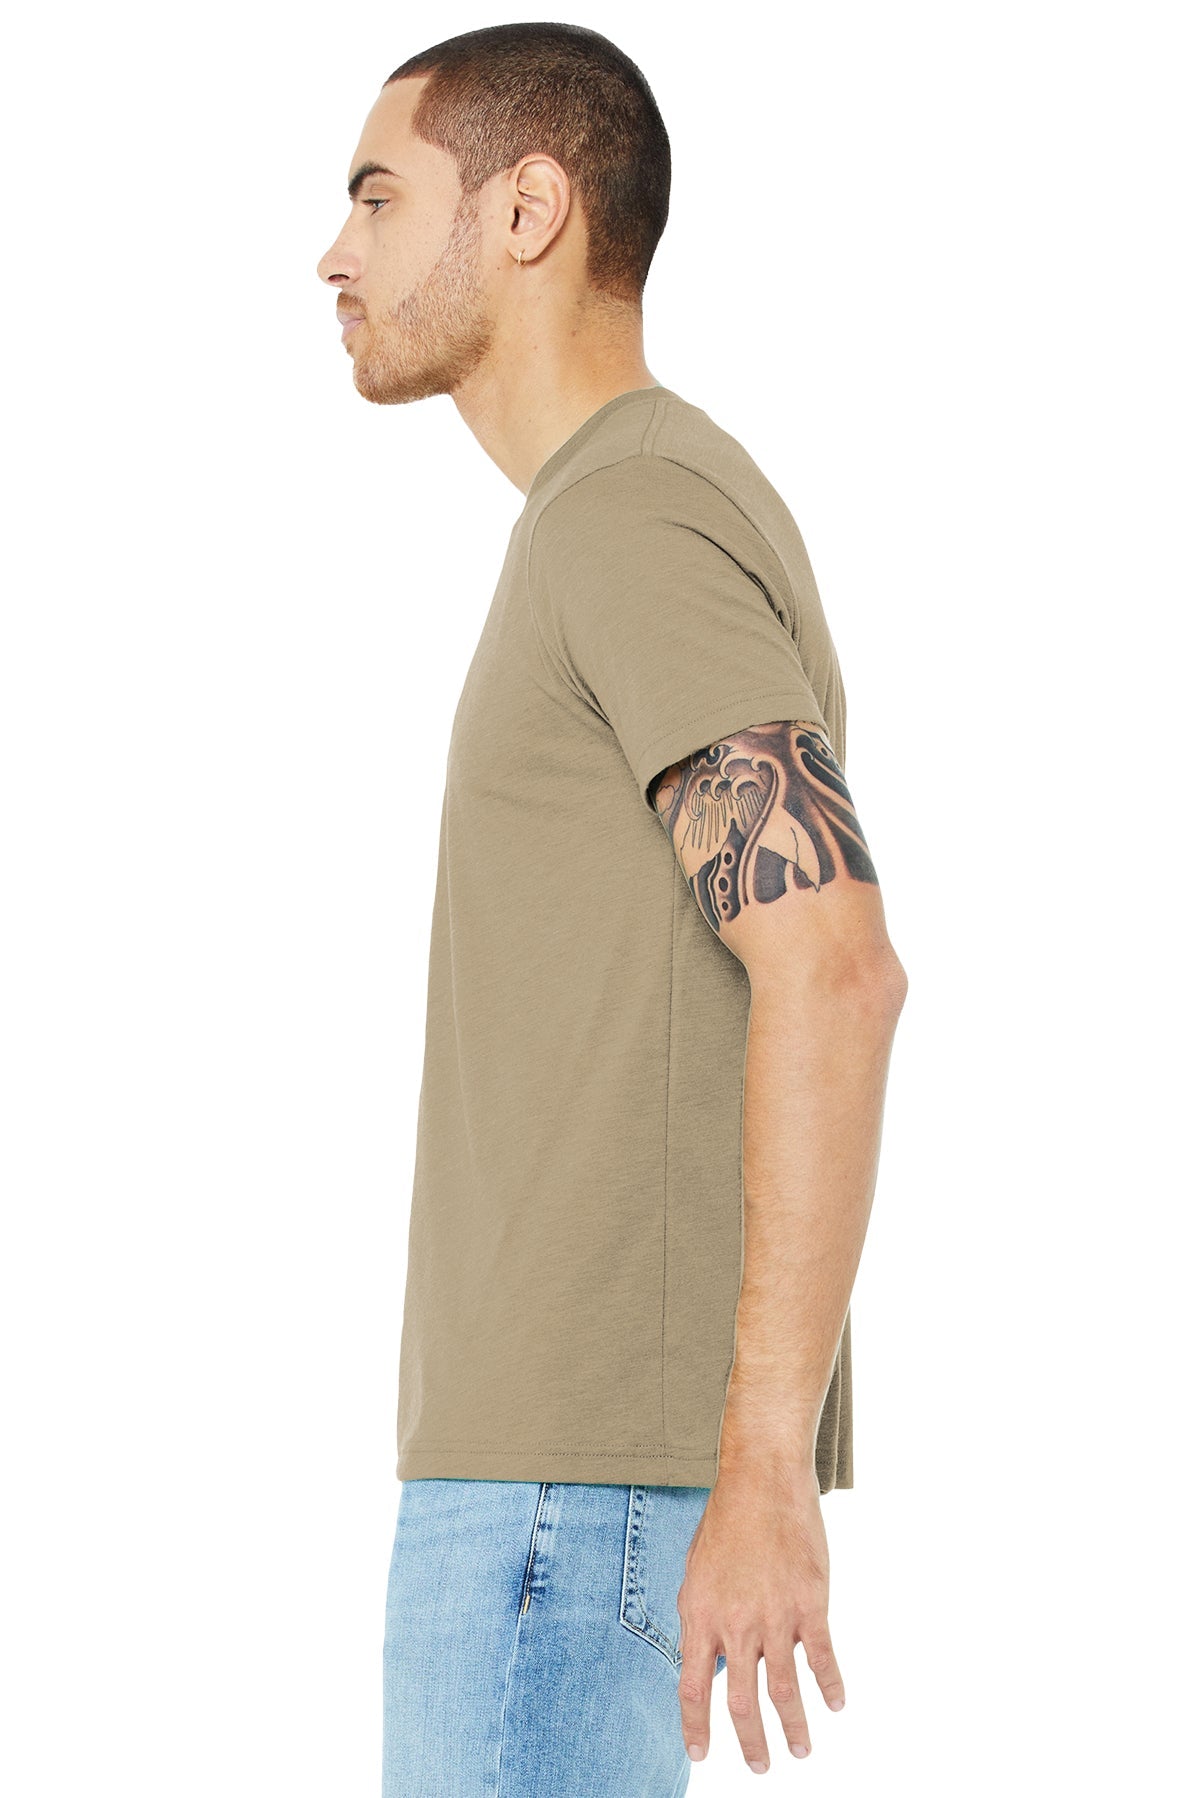 bella + canvas unisex triblend short sleeve t-shirt 3413c tan triblend